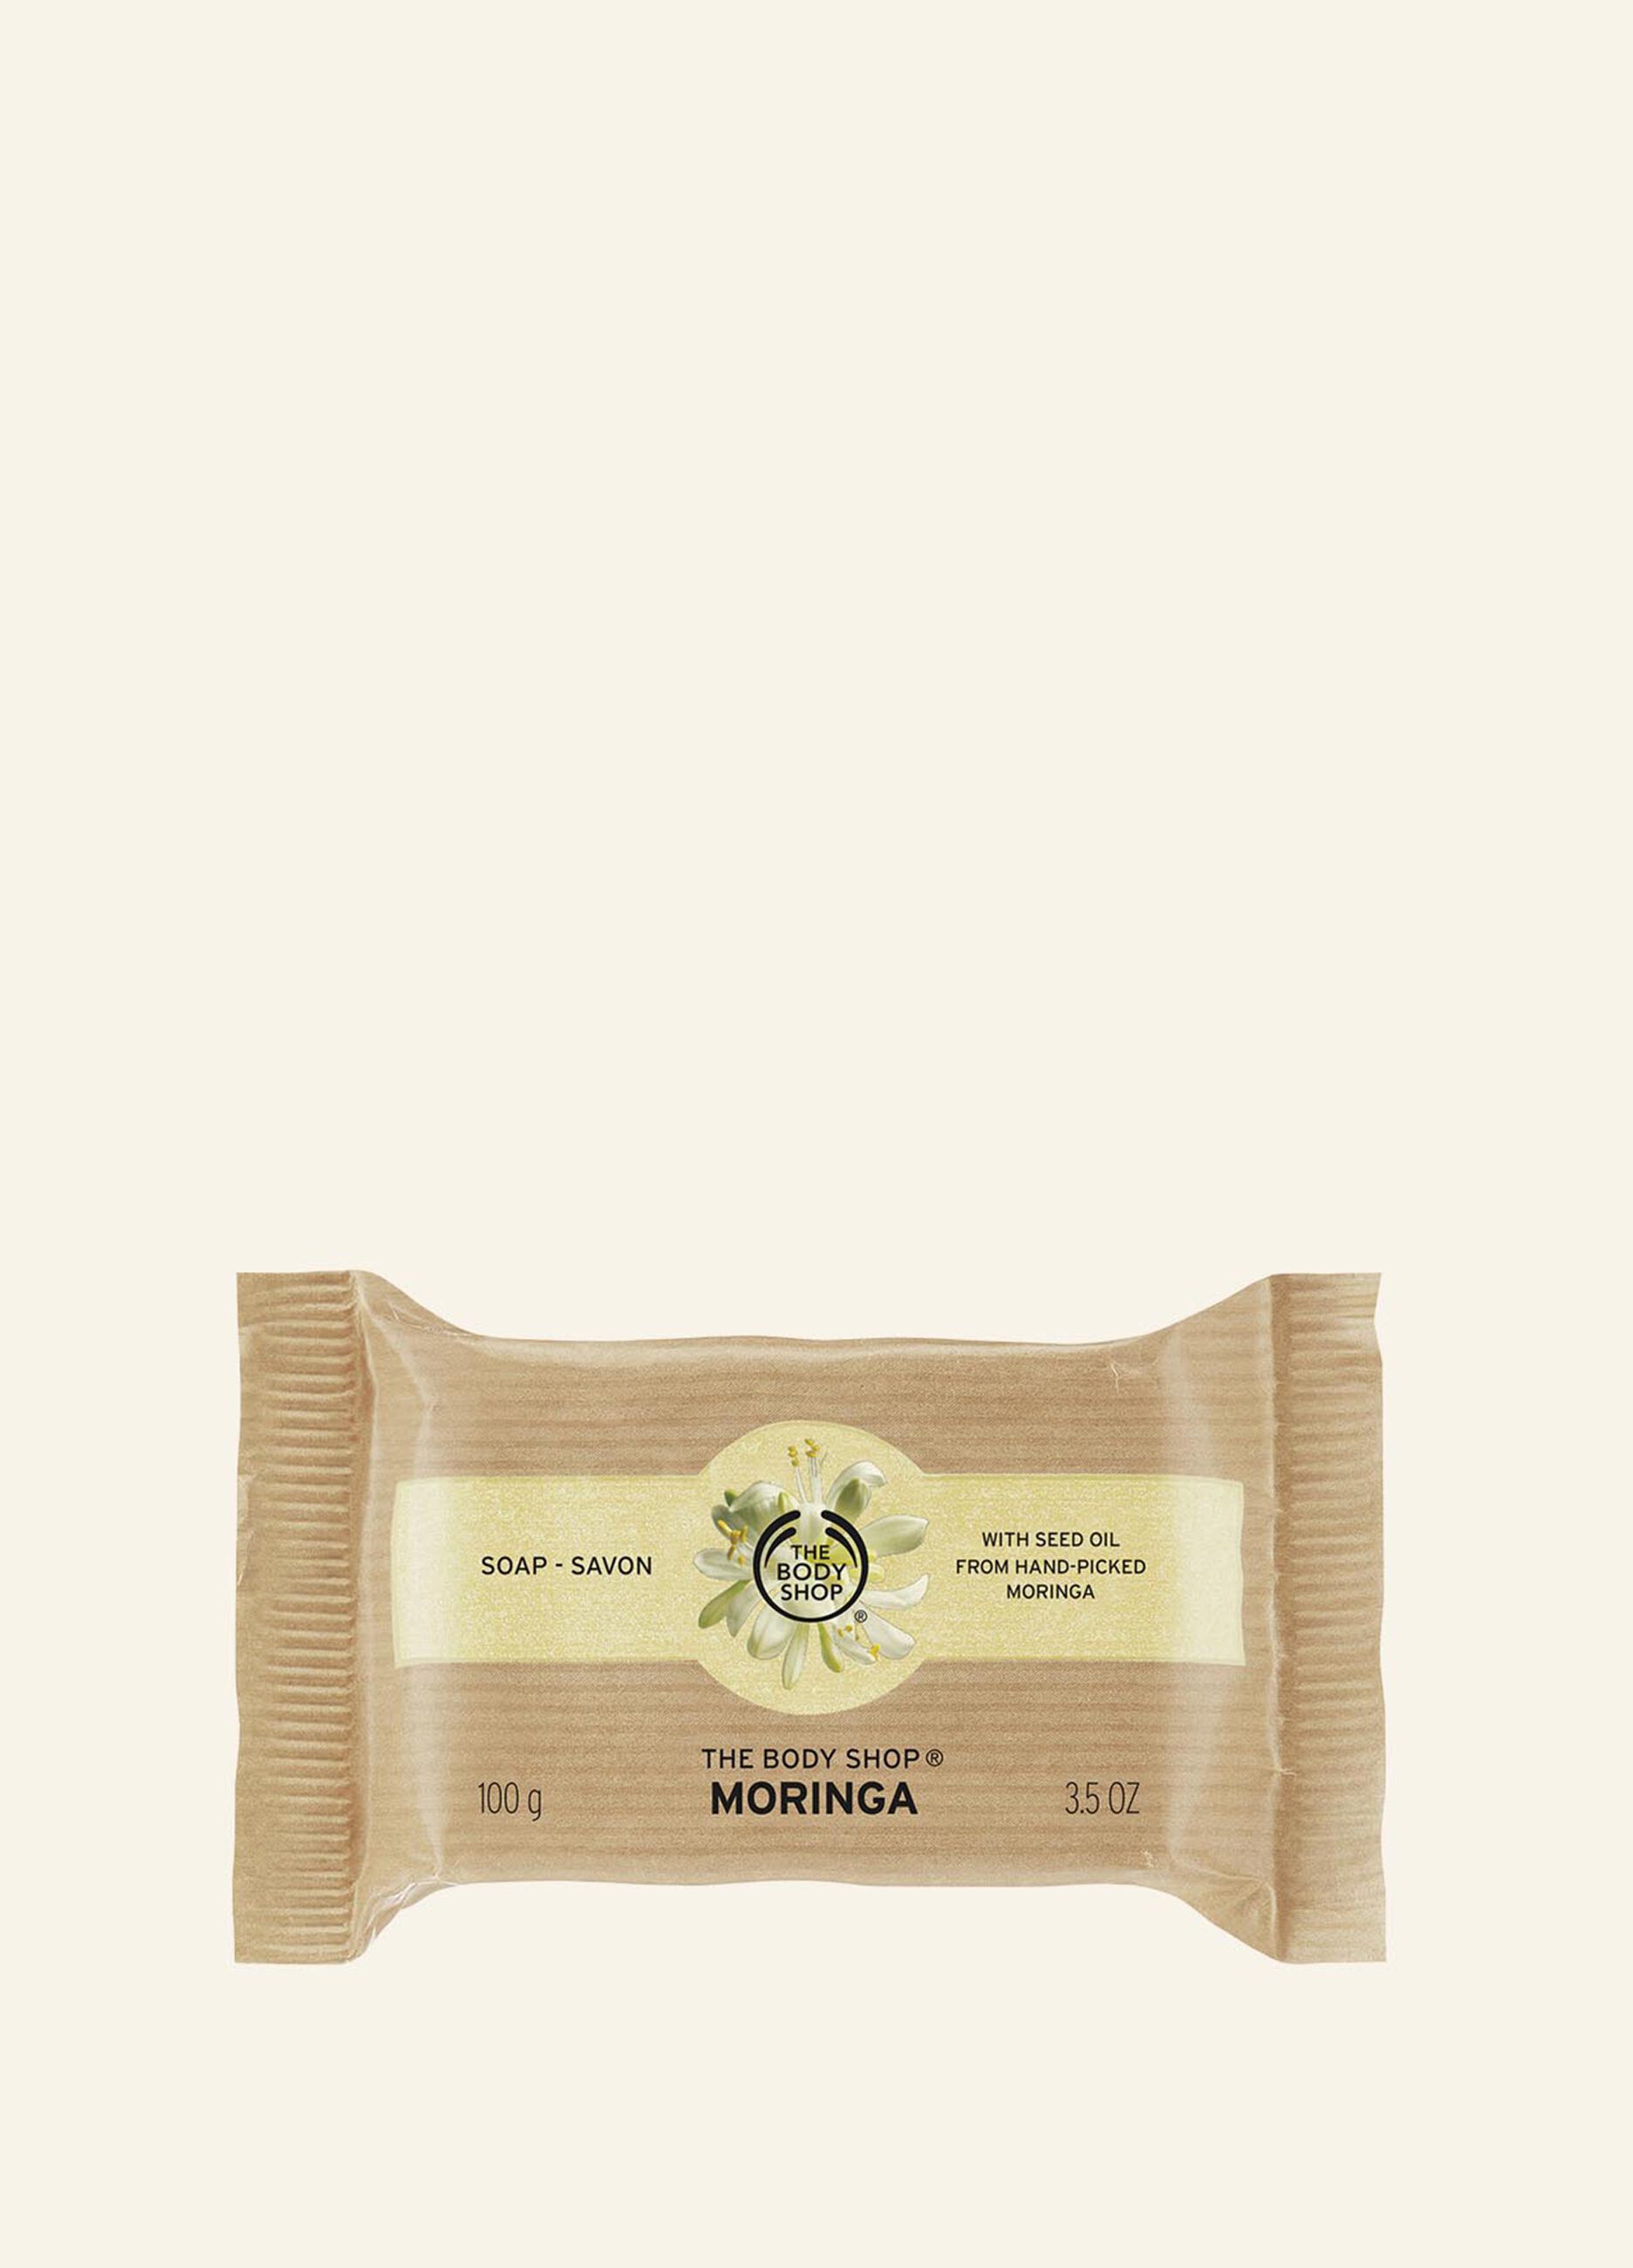 The Body Shop Moringa soap